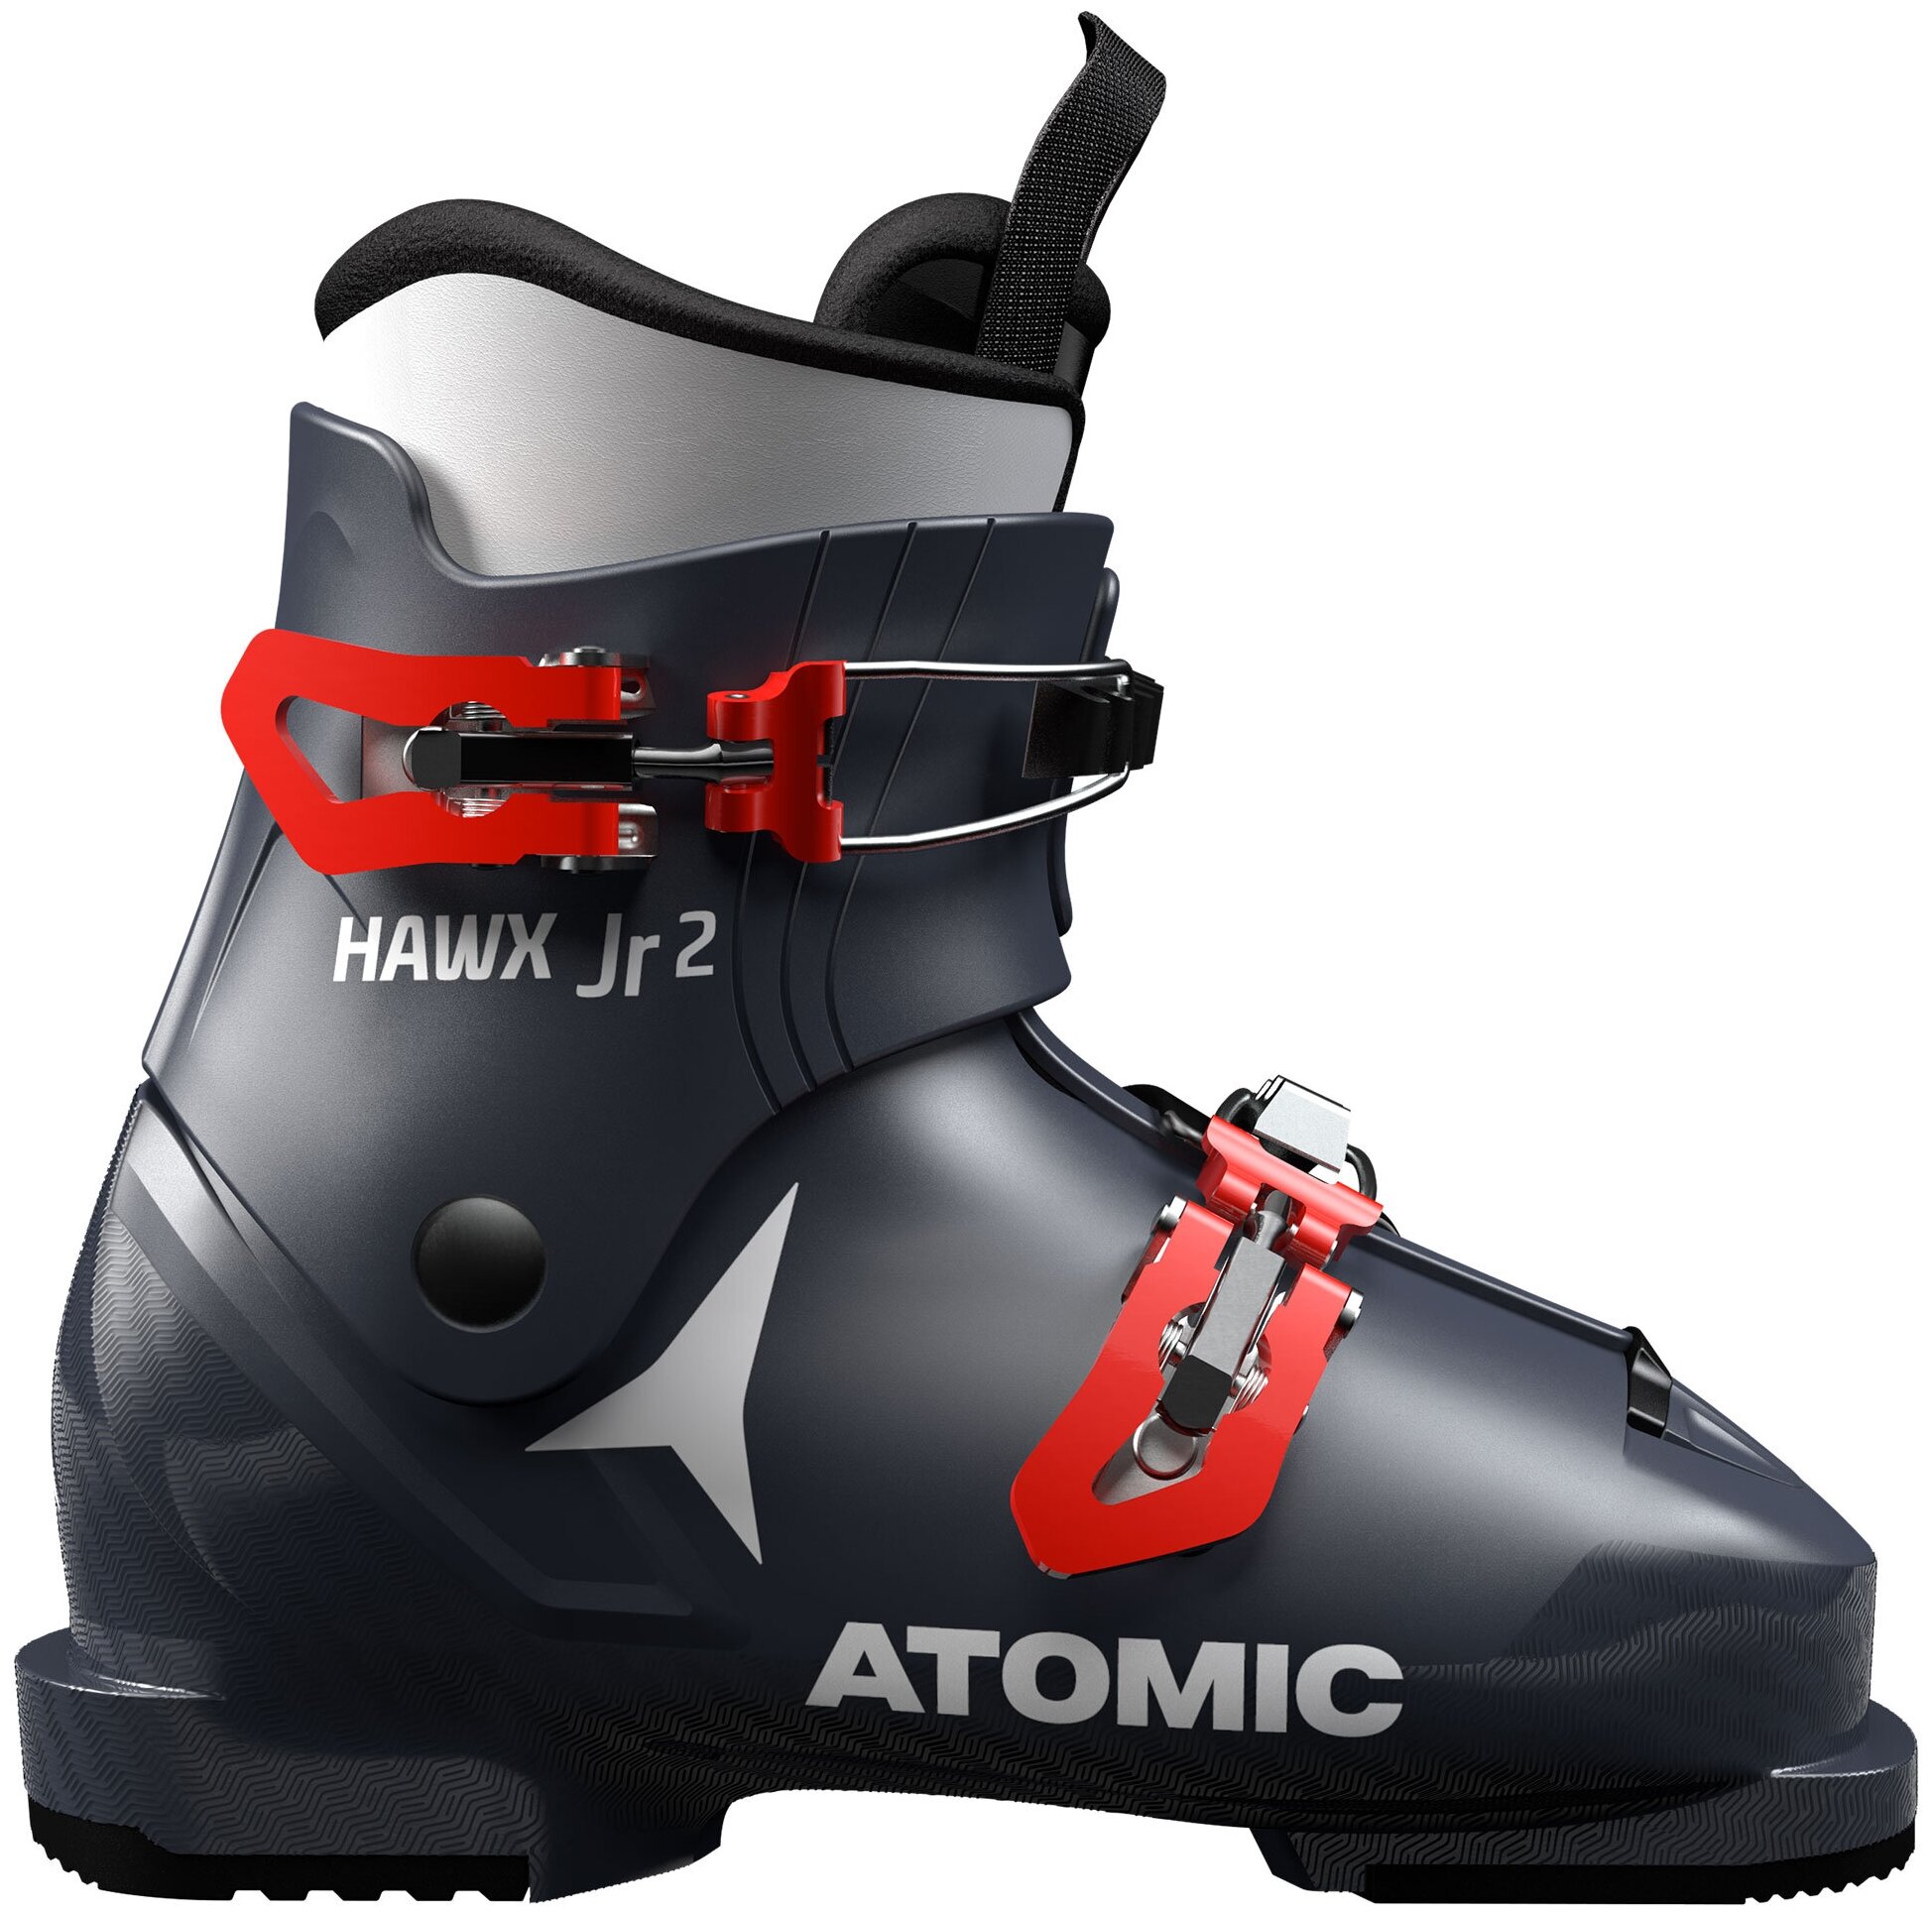   ATOMIC Hawx JR 2 blue/red (:18)